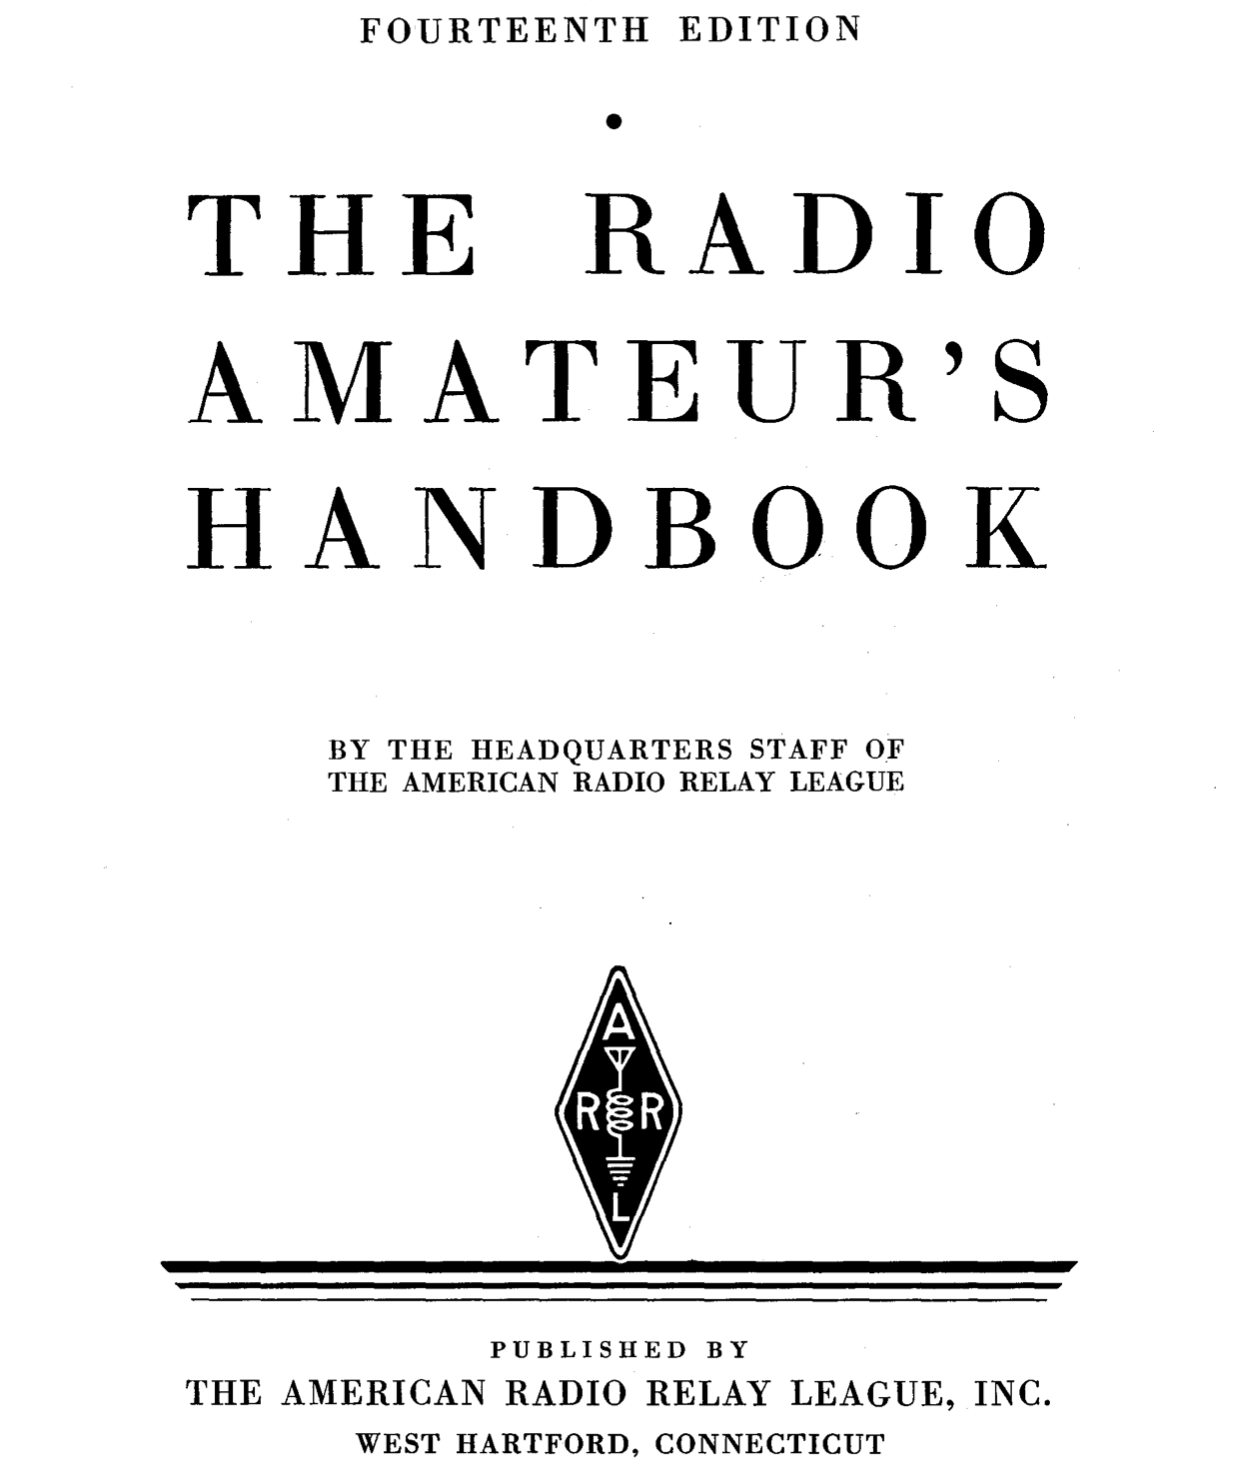 The ARRL Radio Amateurs's Handbook (14th Edition, 1936)